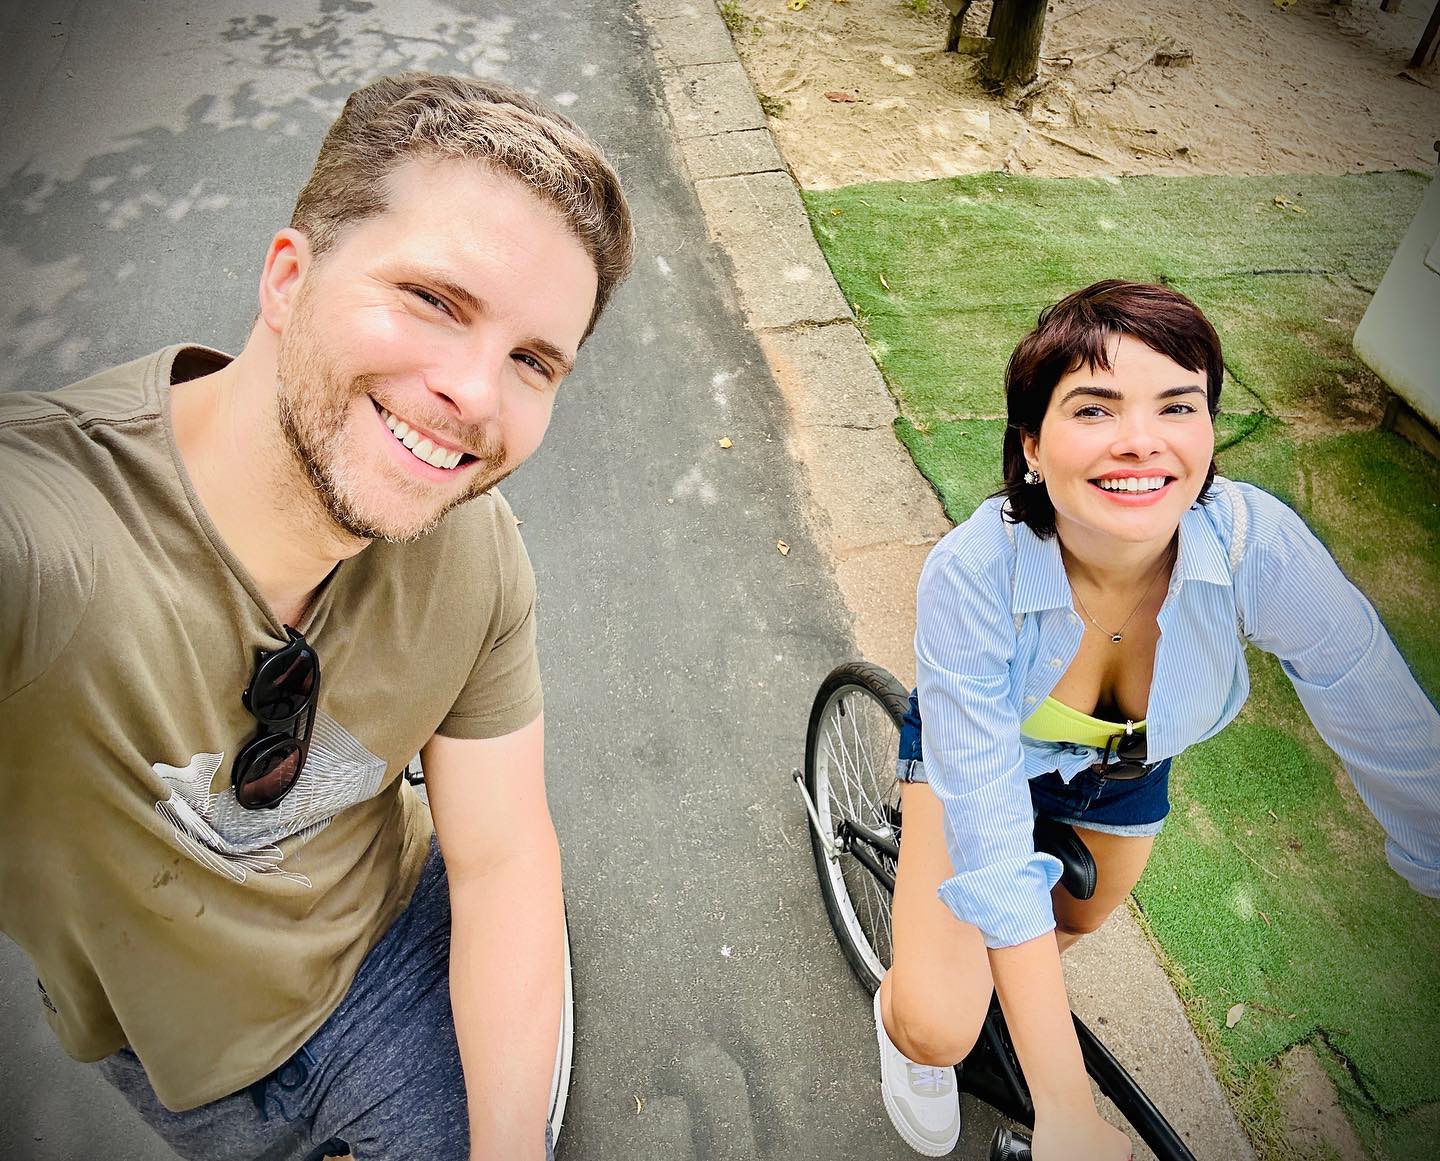 https://e.radikal.host/2023/04/20/Photo-by-Thiago-Fragoso-in-Lagoa-Rodrigo-de-Freitas.-May-be-a-selfie-of-2-people-people-smiling-bicycle-tire-and-park..jpg